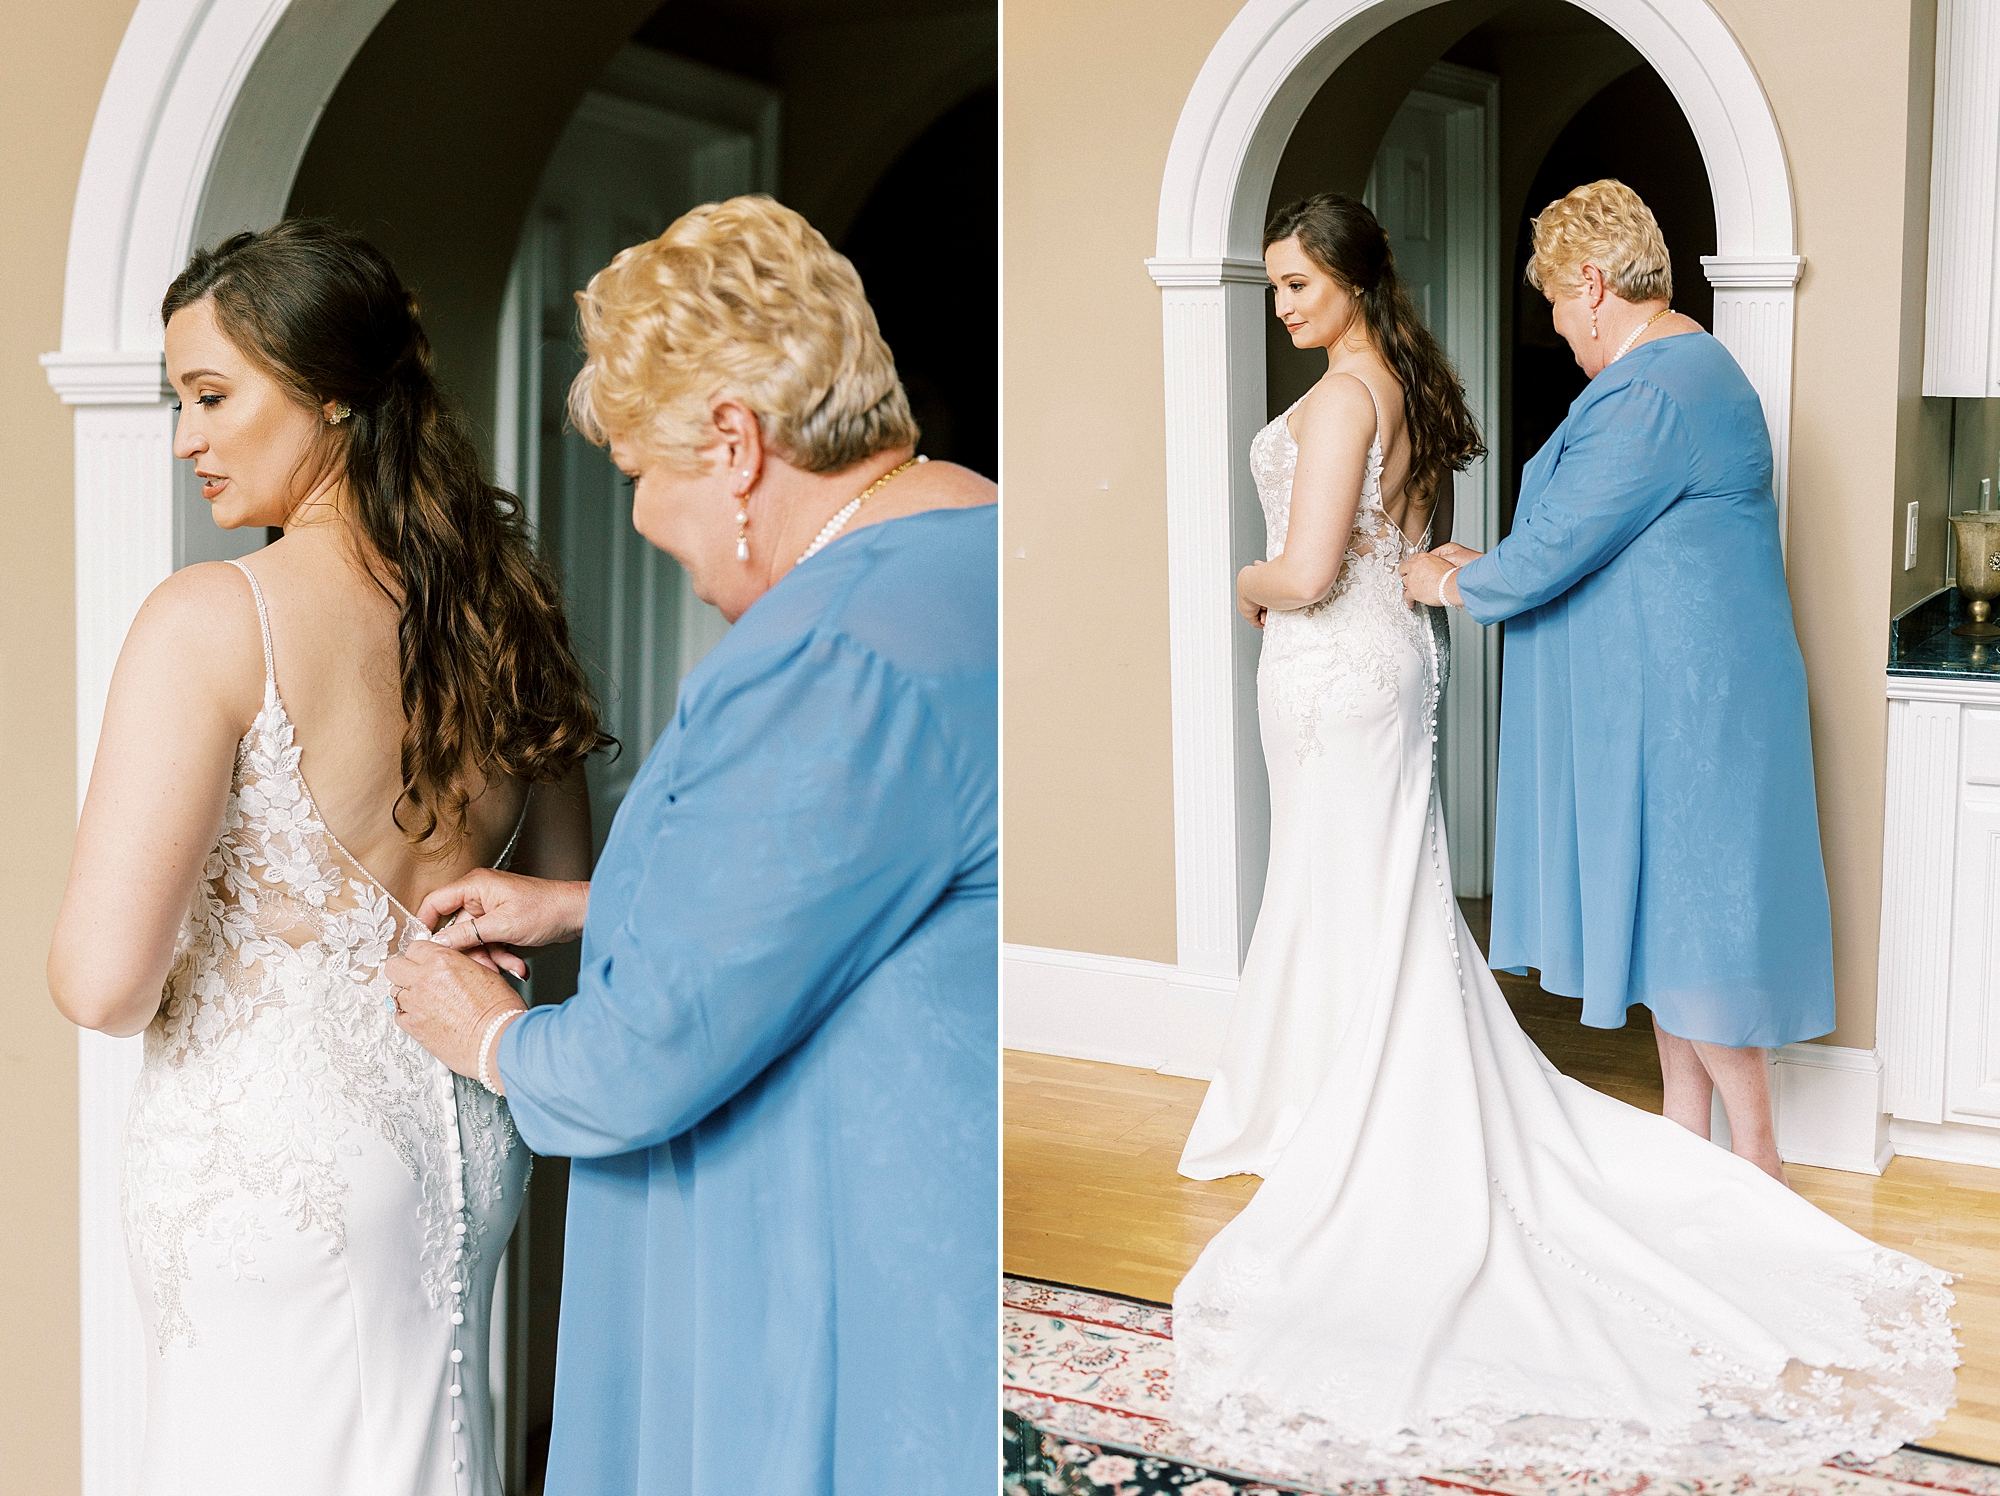 mom in blue dress helps bride into wedding dress